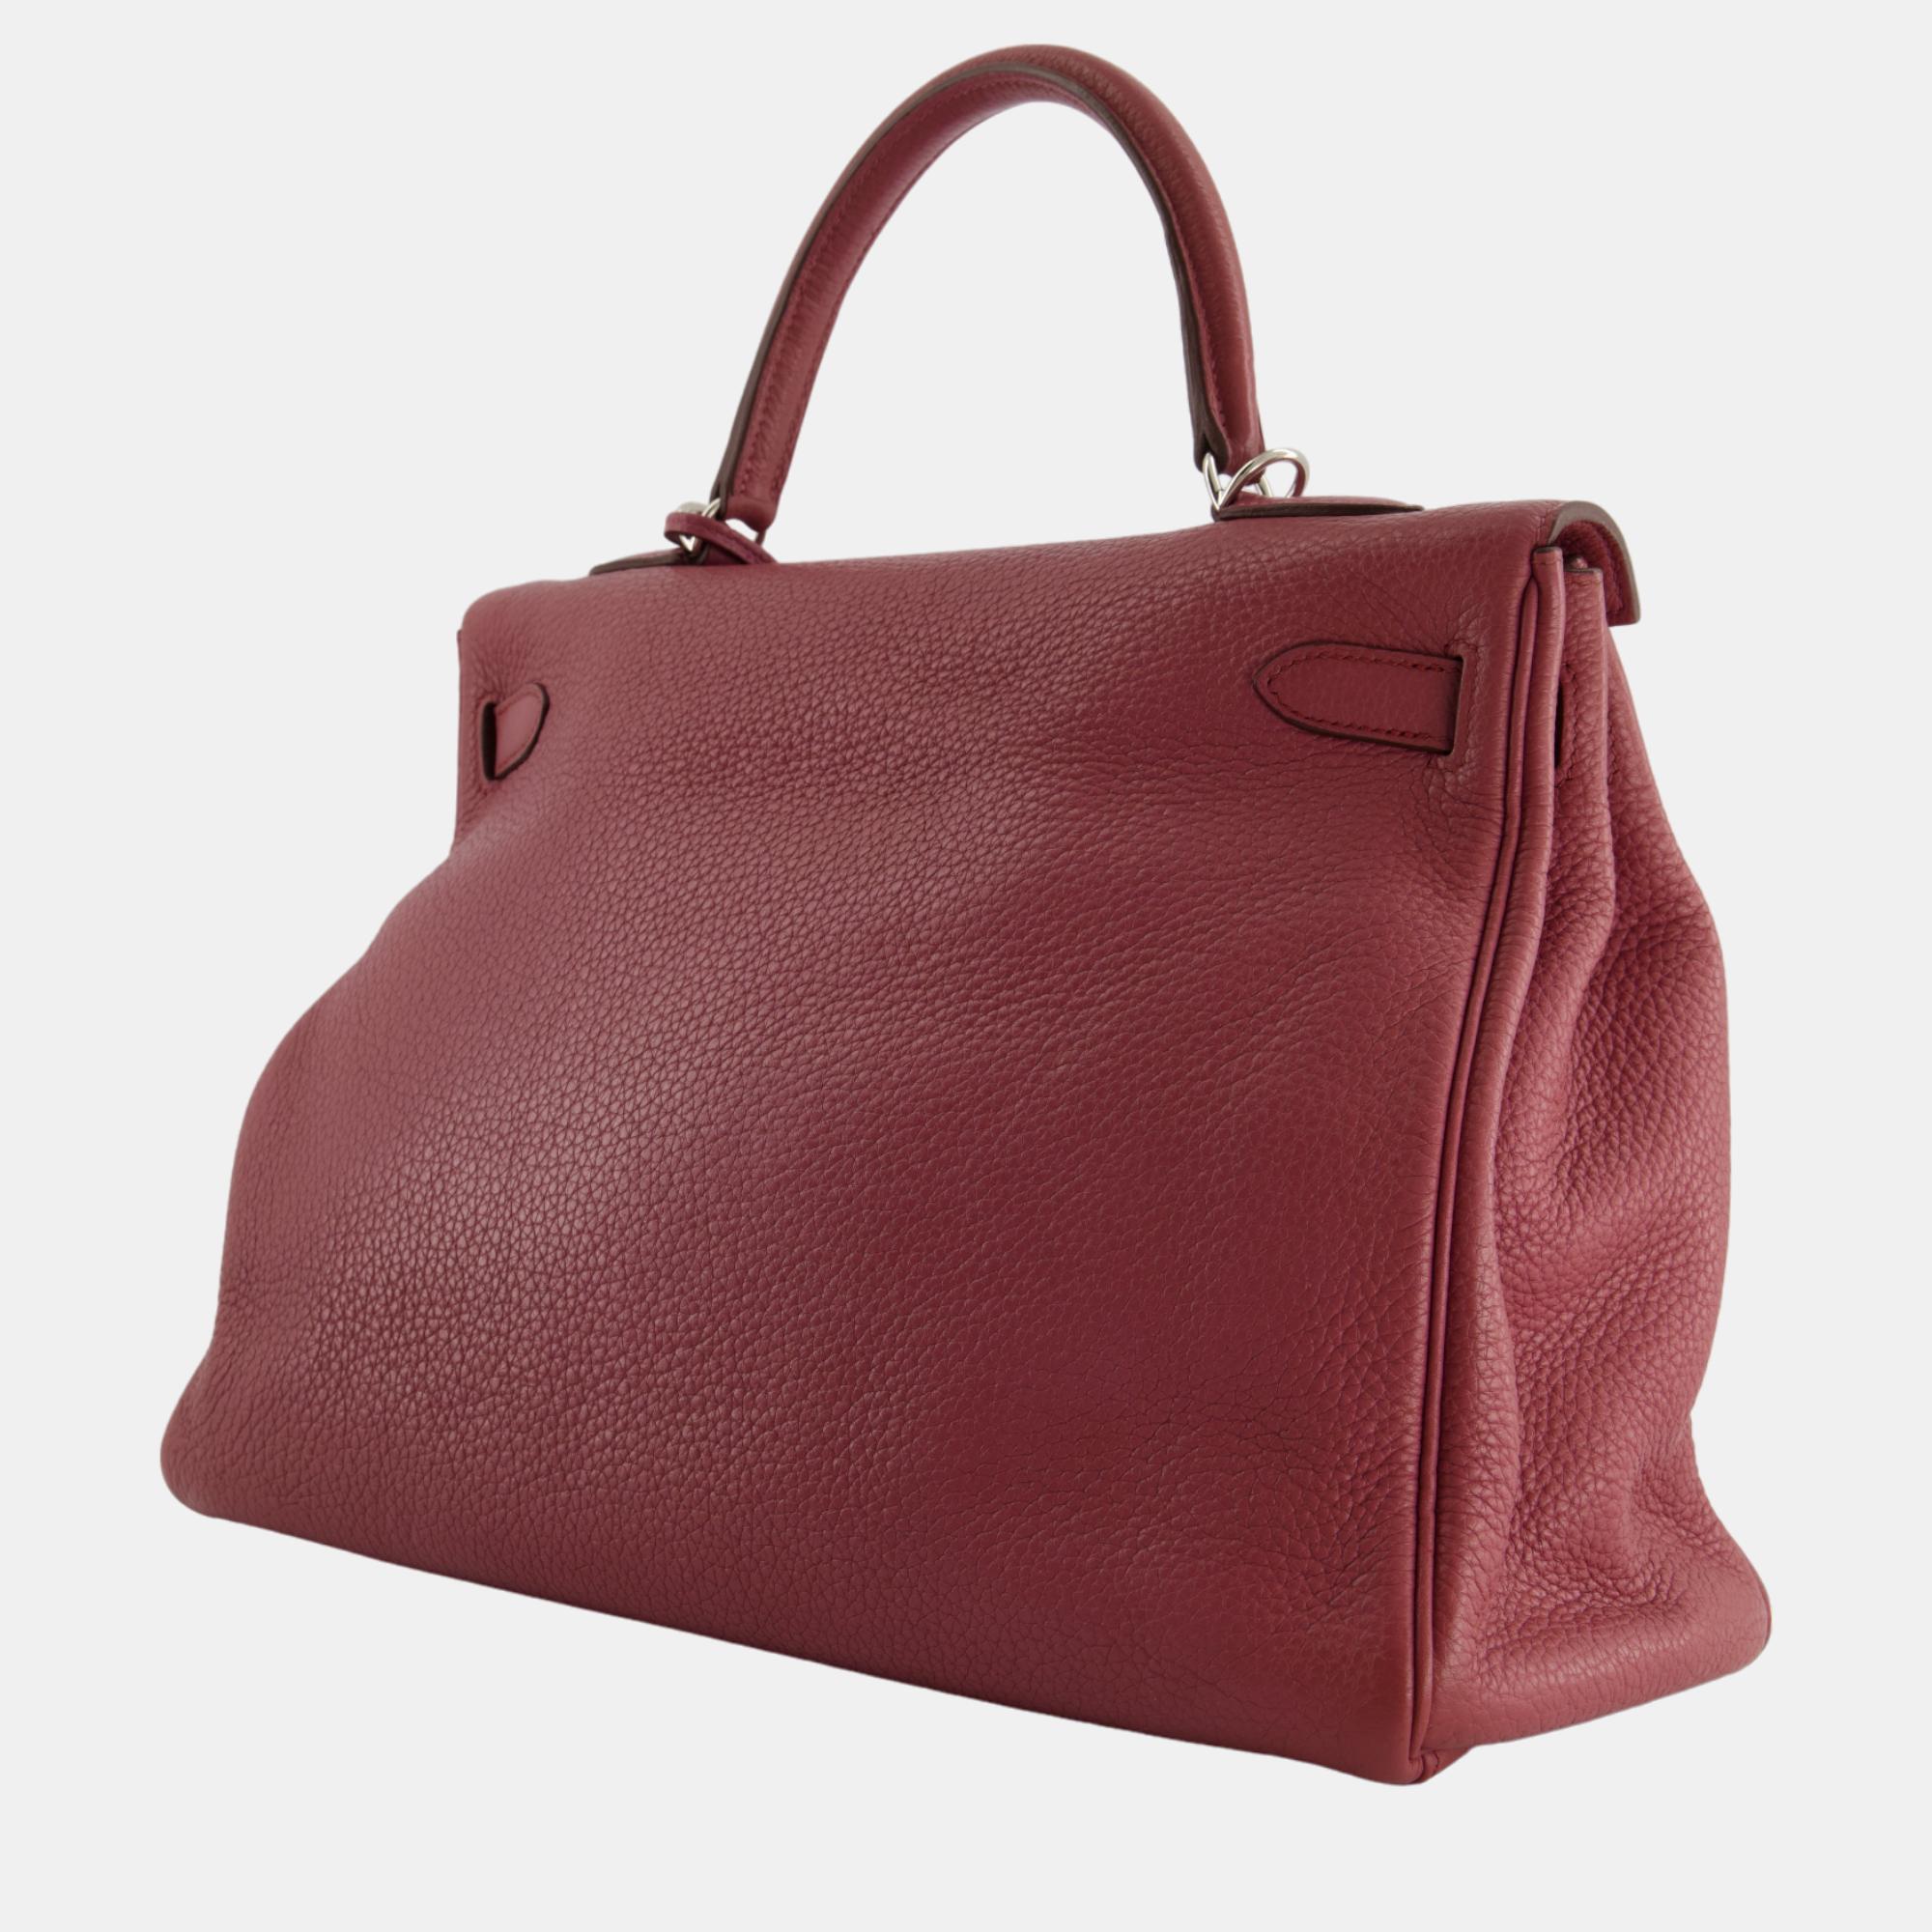 Hermes Kelly Bag 35cm In Bois De Rose Togo Leather With Palladium Hardware